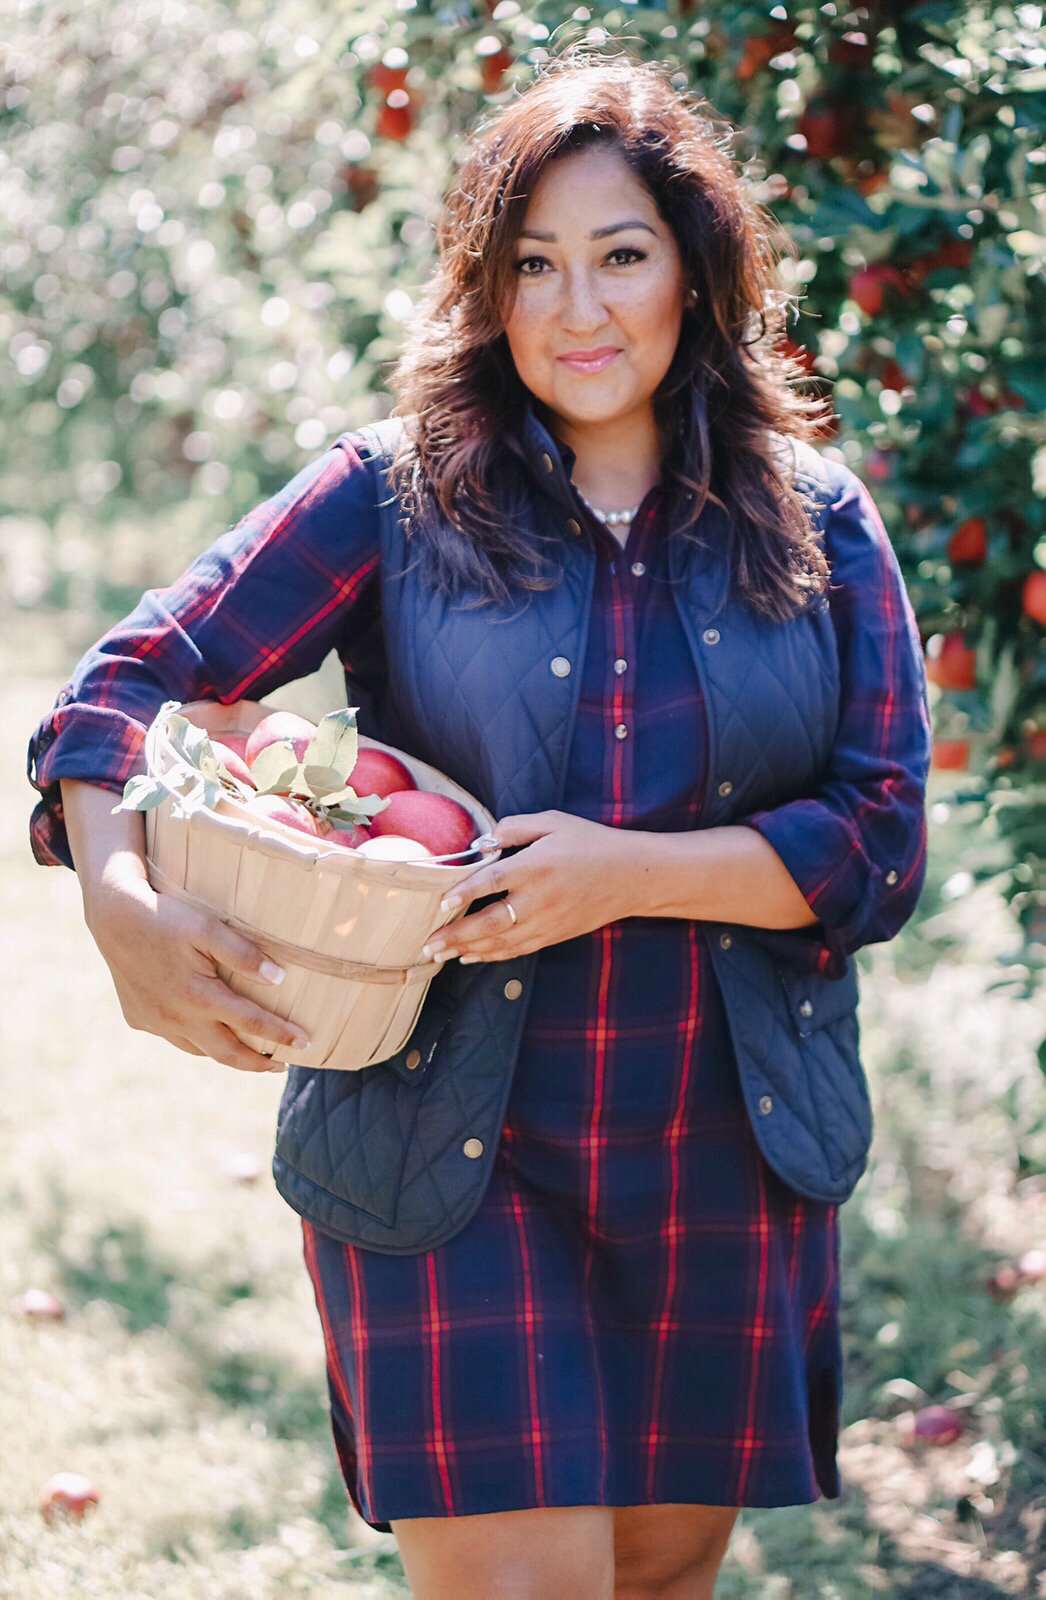 Apple harvest season in CT.